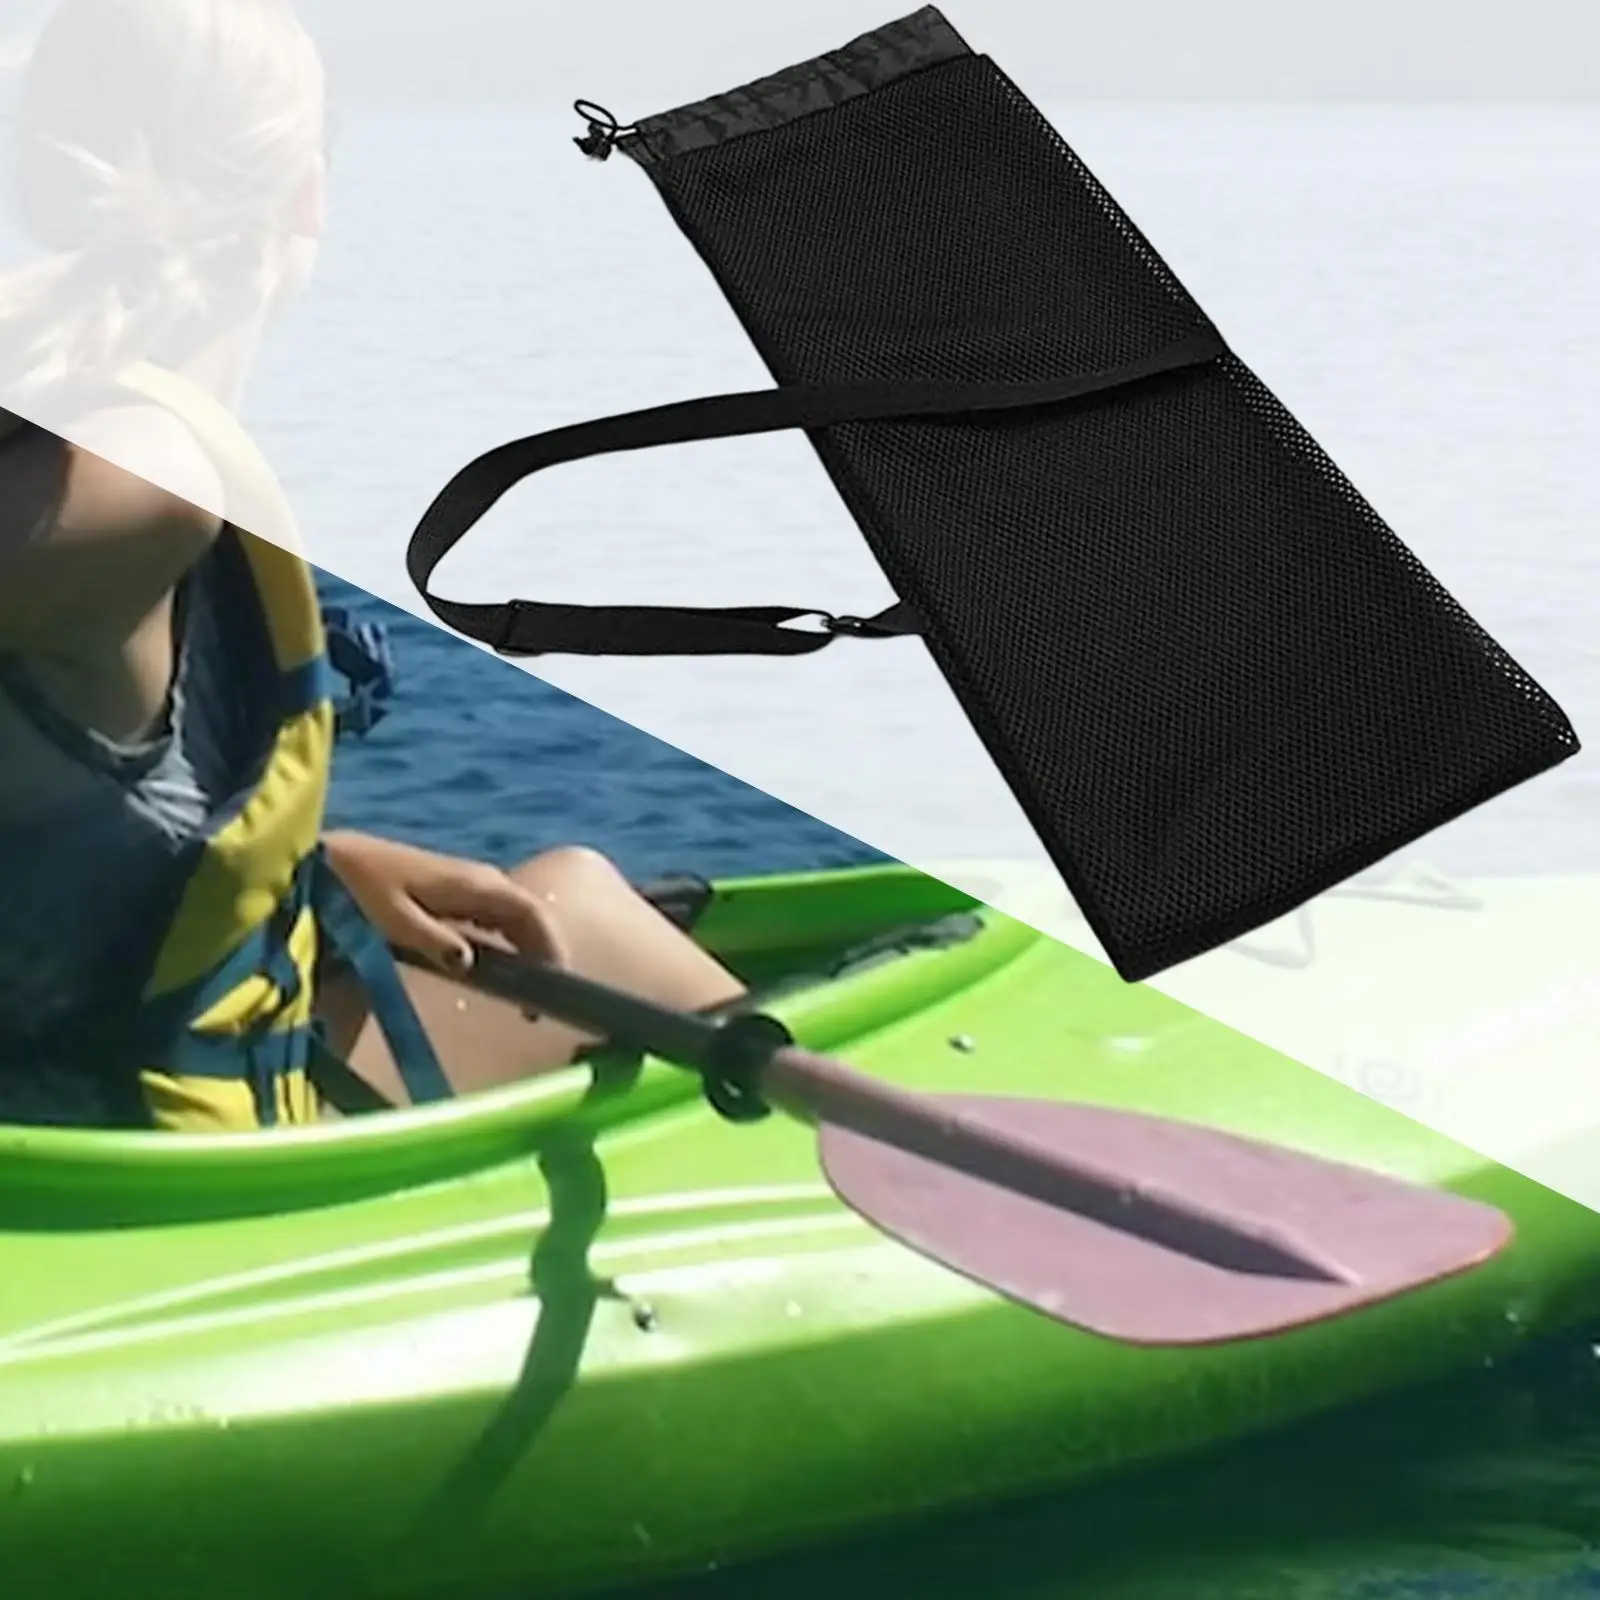 Portable  Storage Bag Adjustable Shoulder Strap for Canoe Pouch Drawstring Mesh Carrying Bag Holder Protector Cover